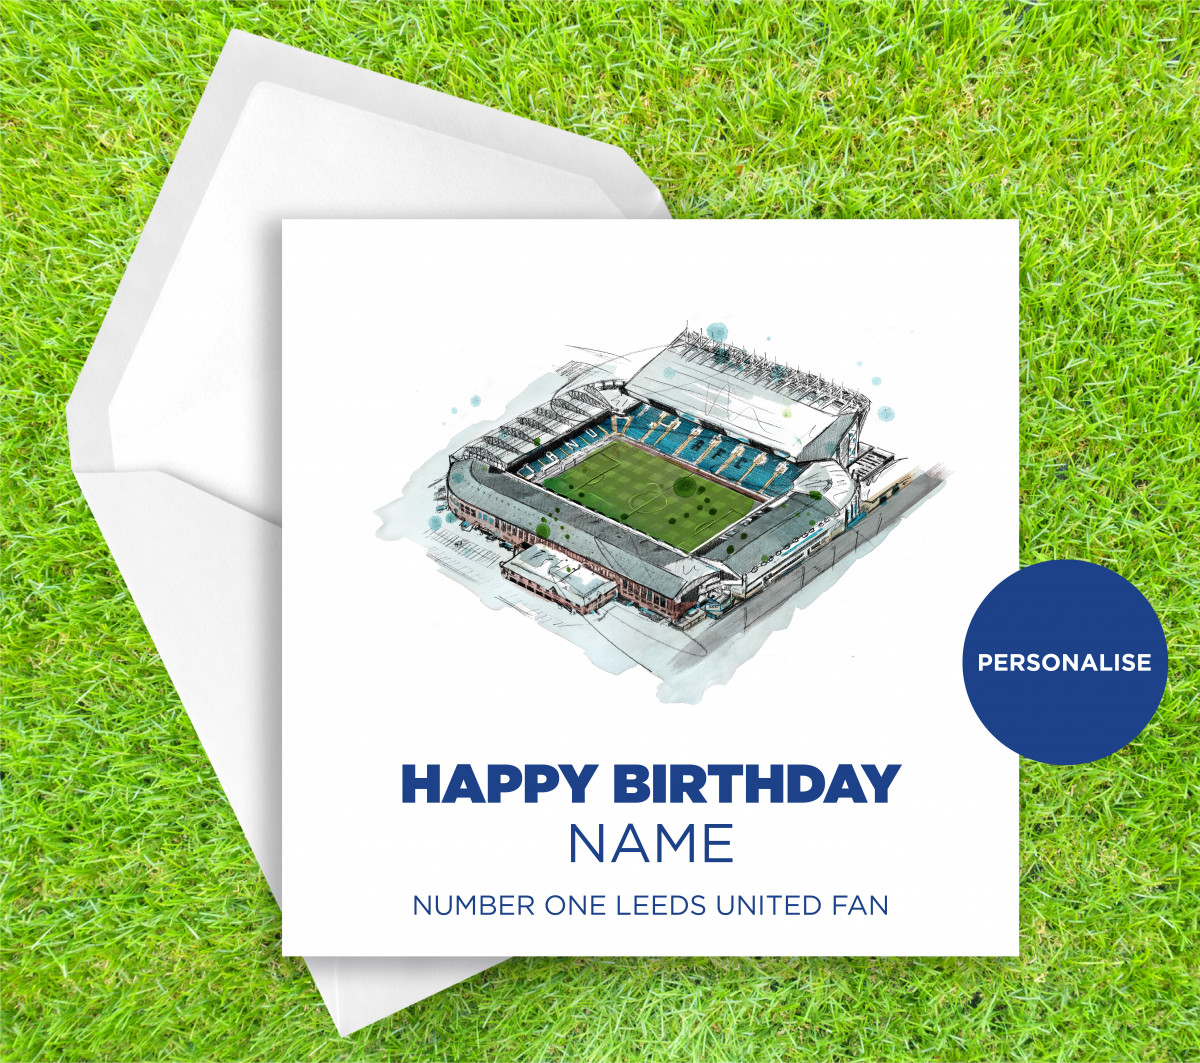 Leeds United, Elland Road, personalised birthday card